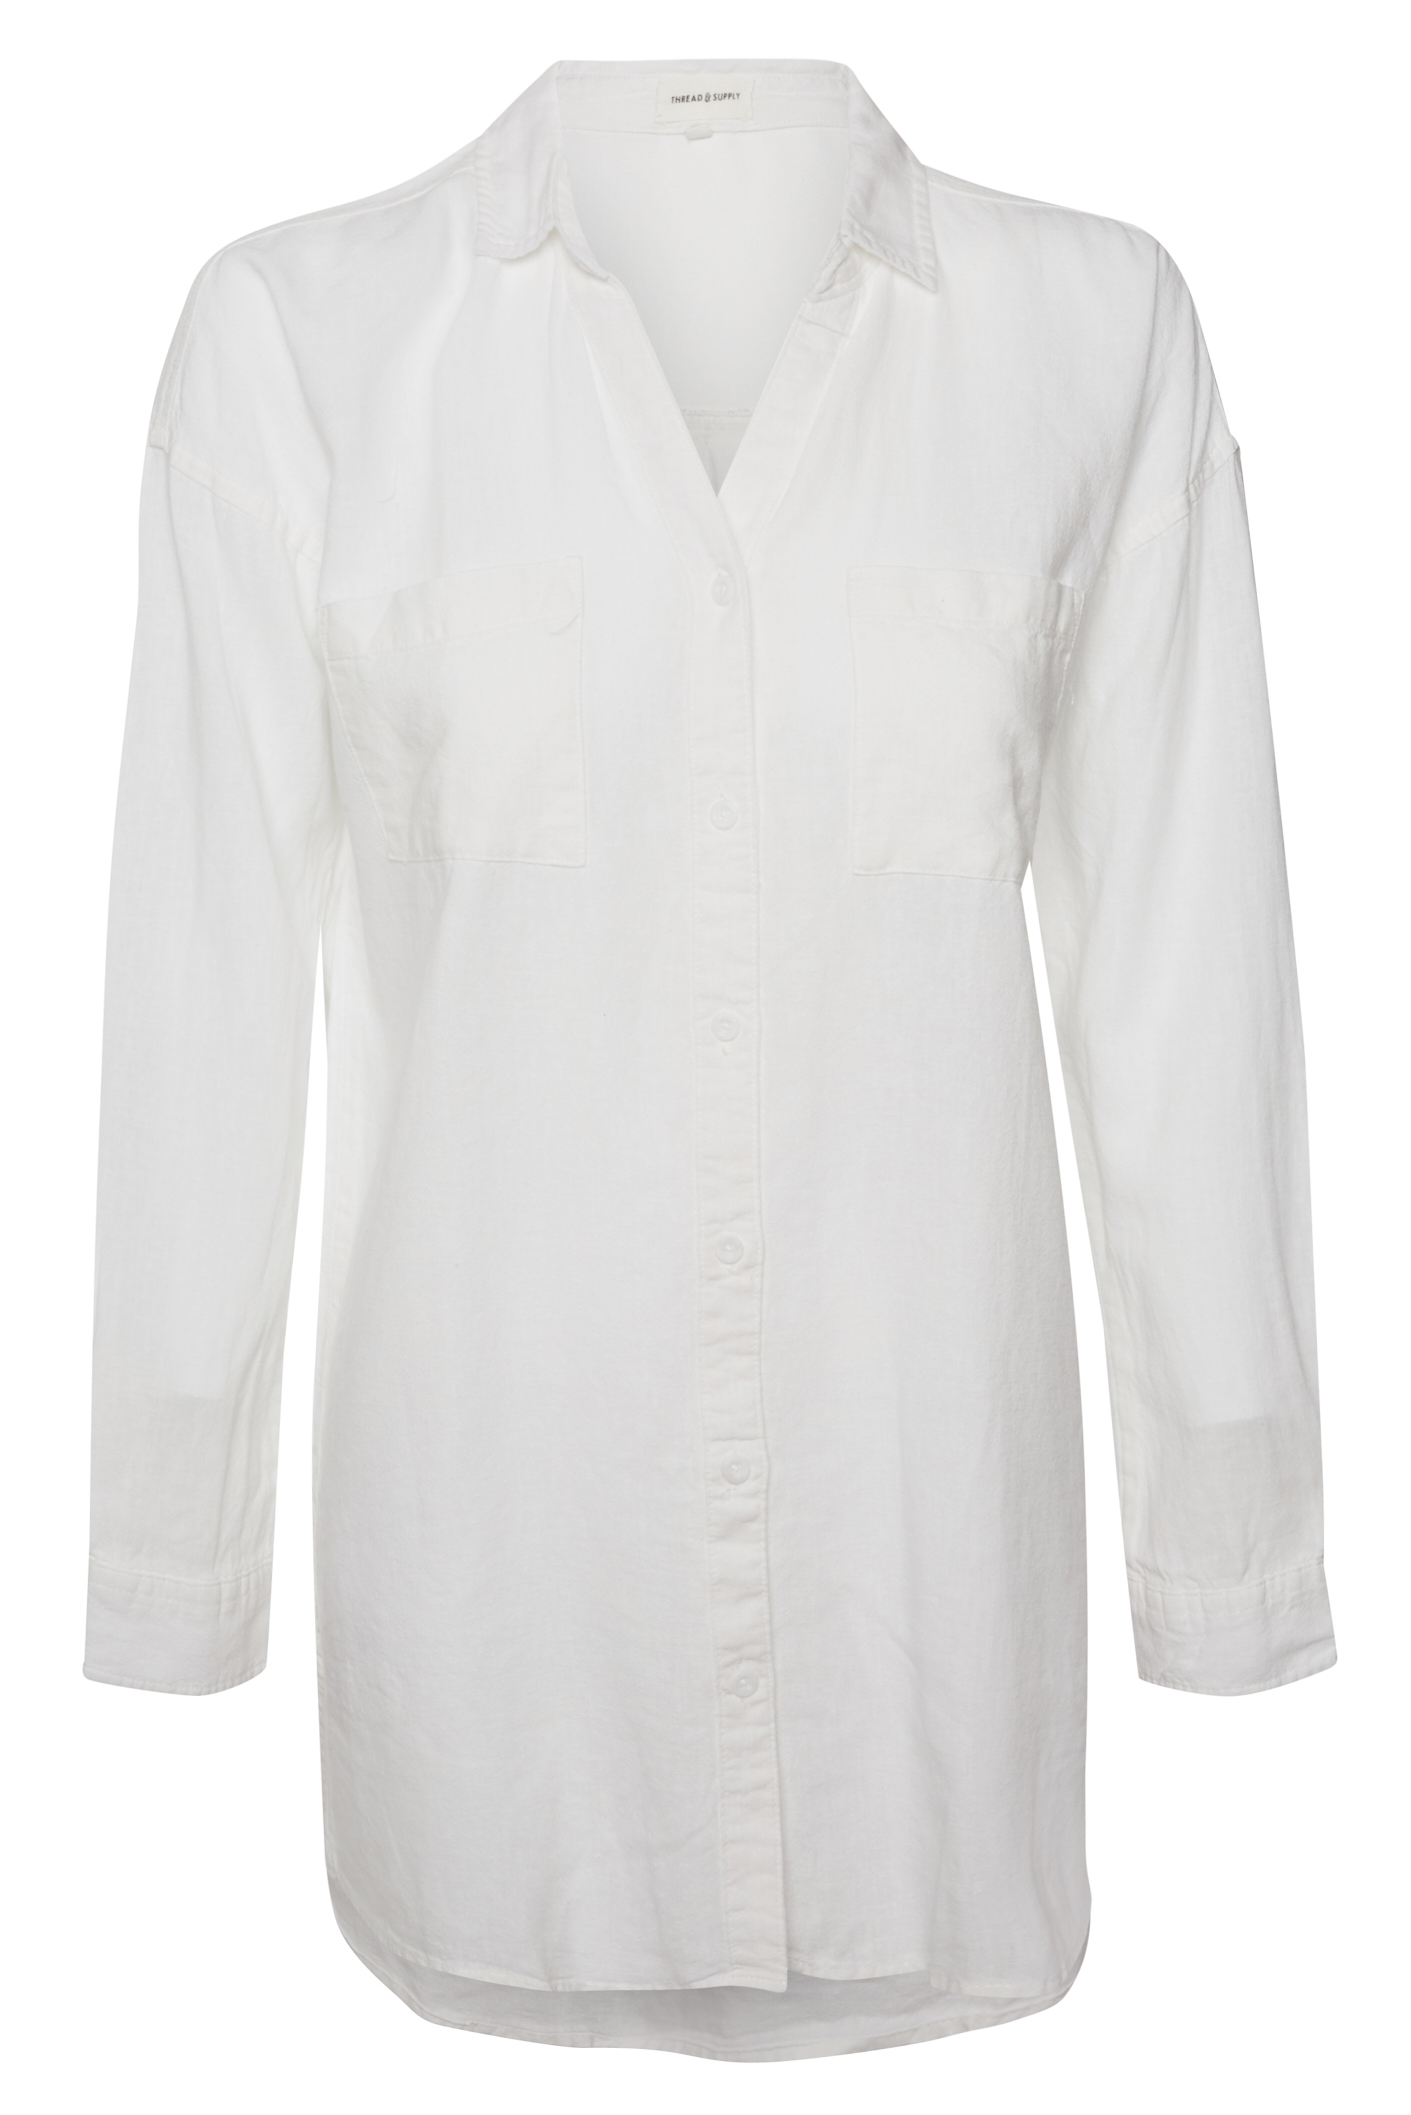 Thread & Supply Button-Down Tunic in White L | DAILYLOOK